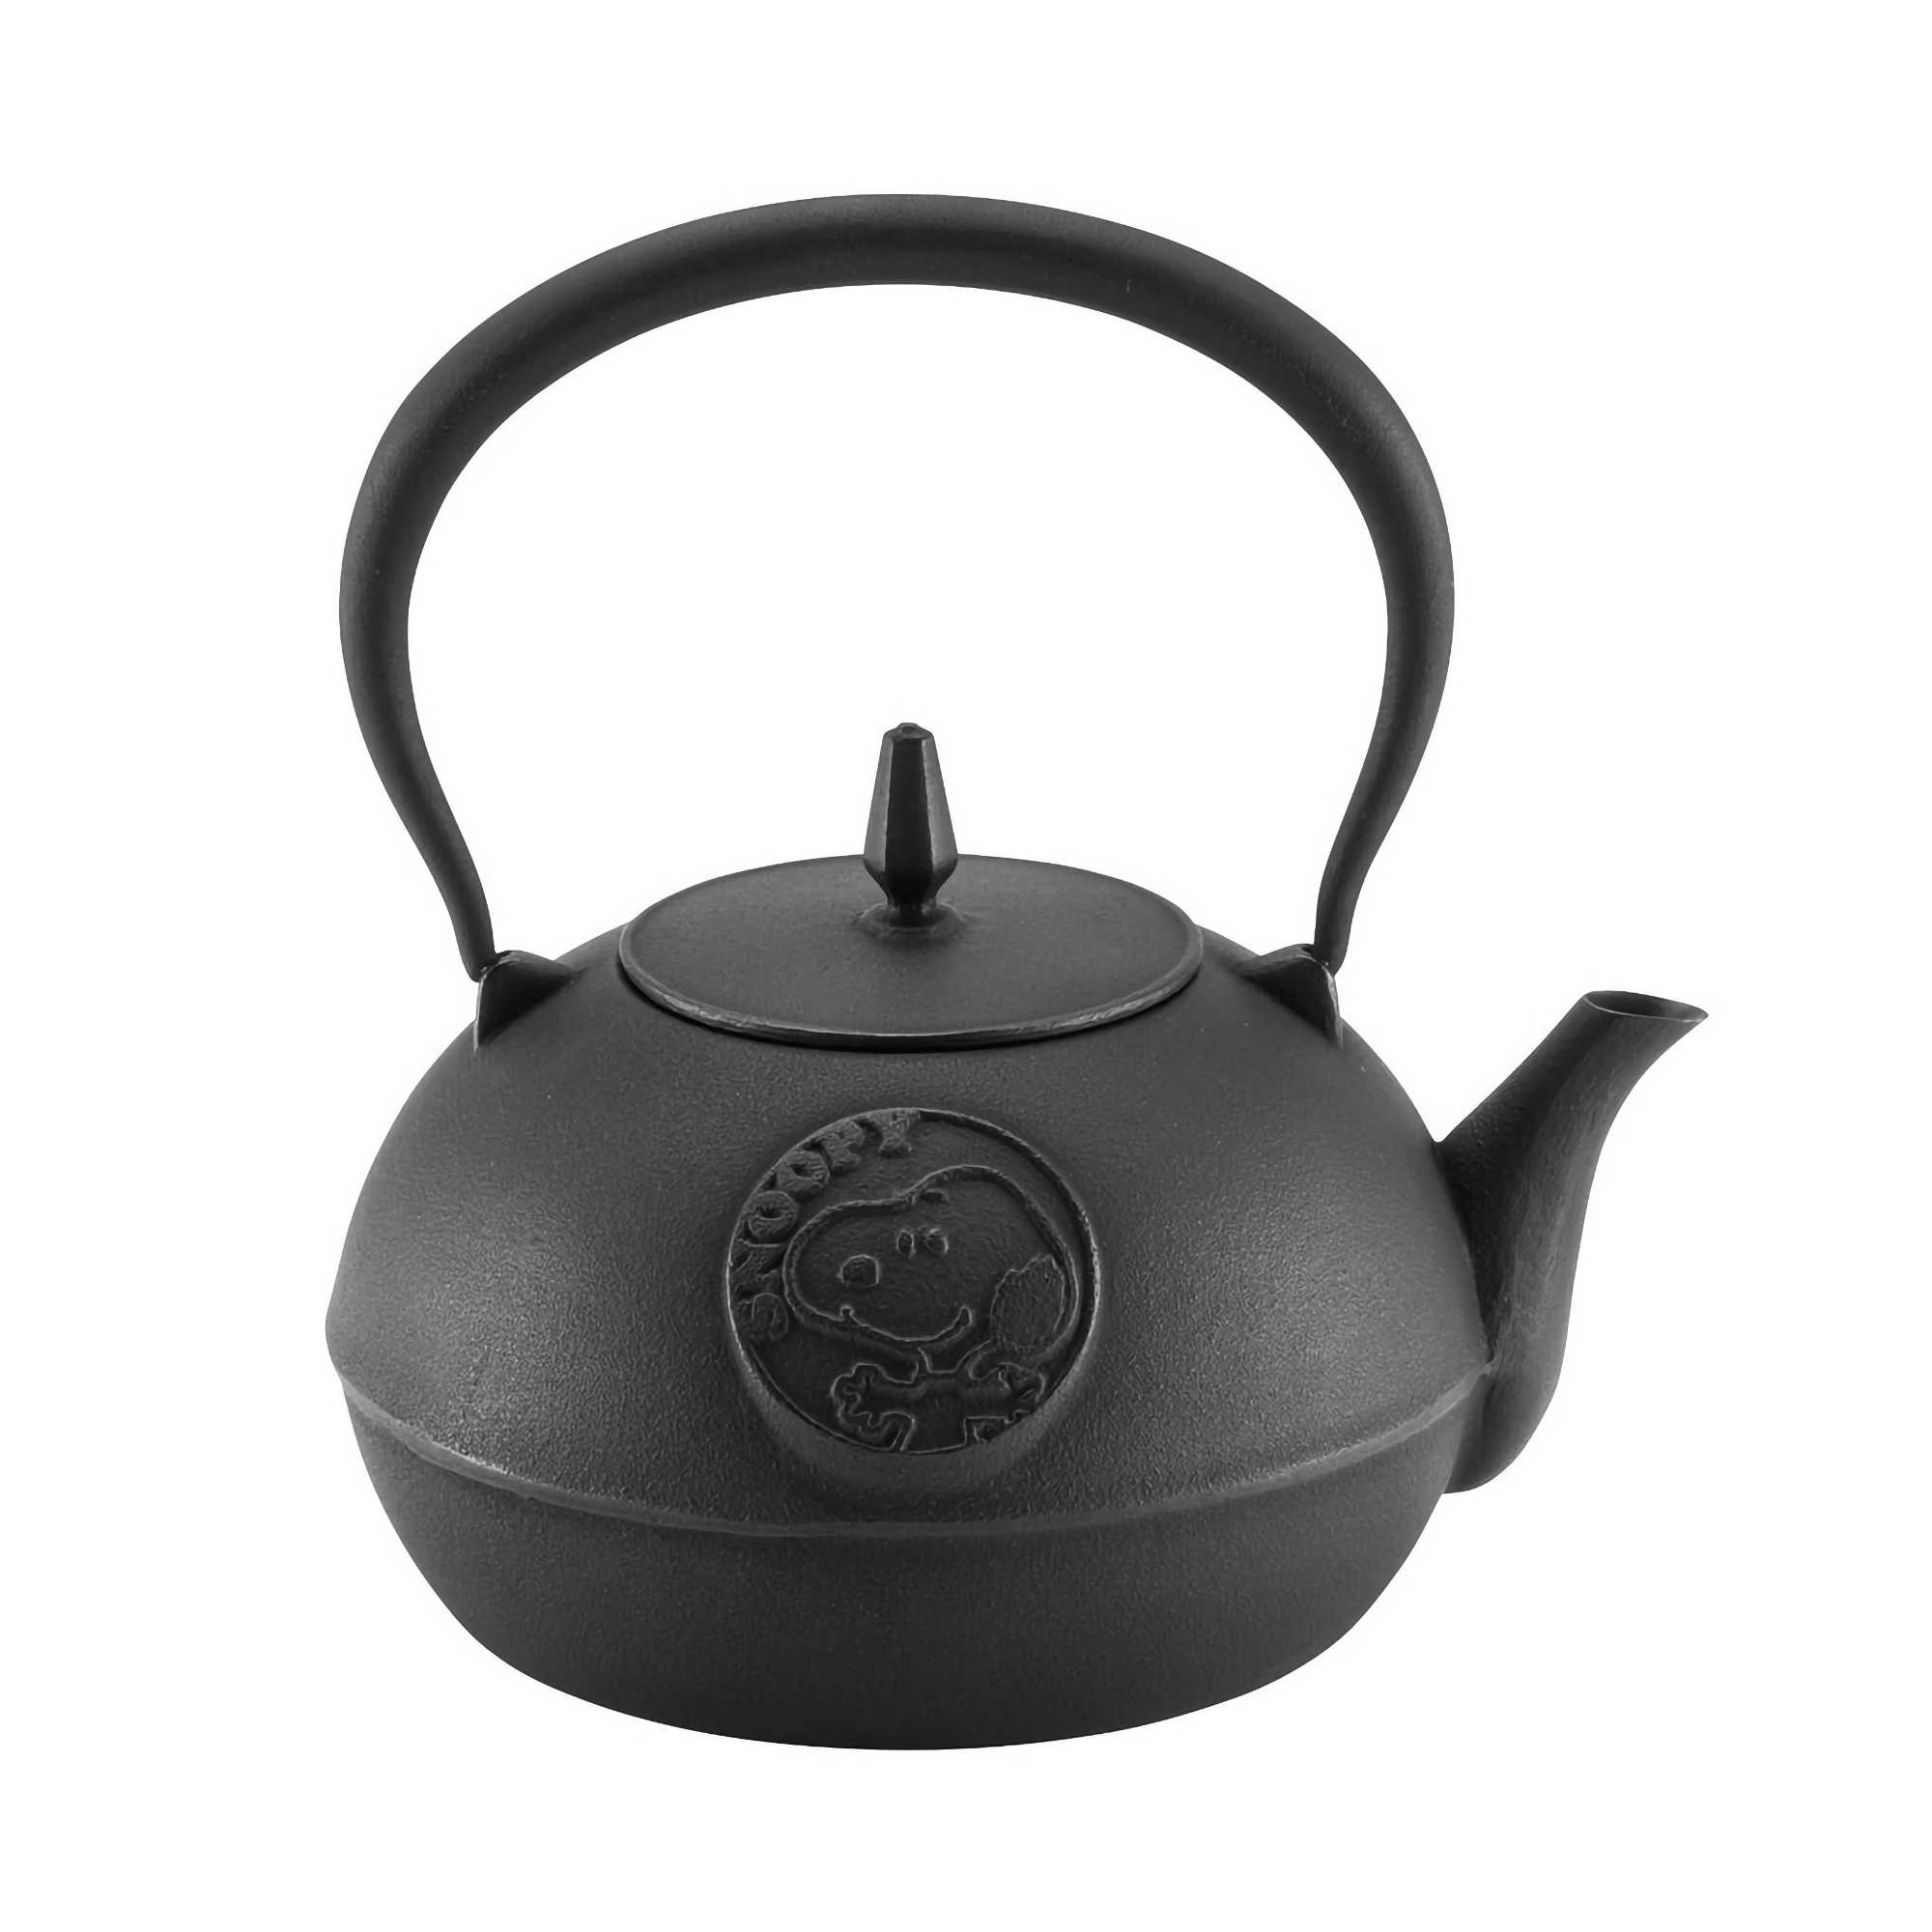 Snoopy Japanese Cast Iron Tea Pot